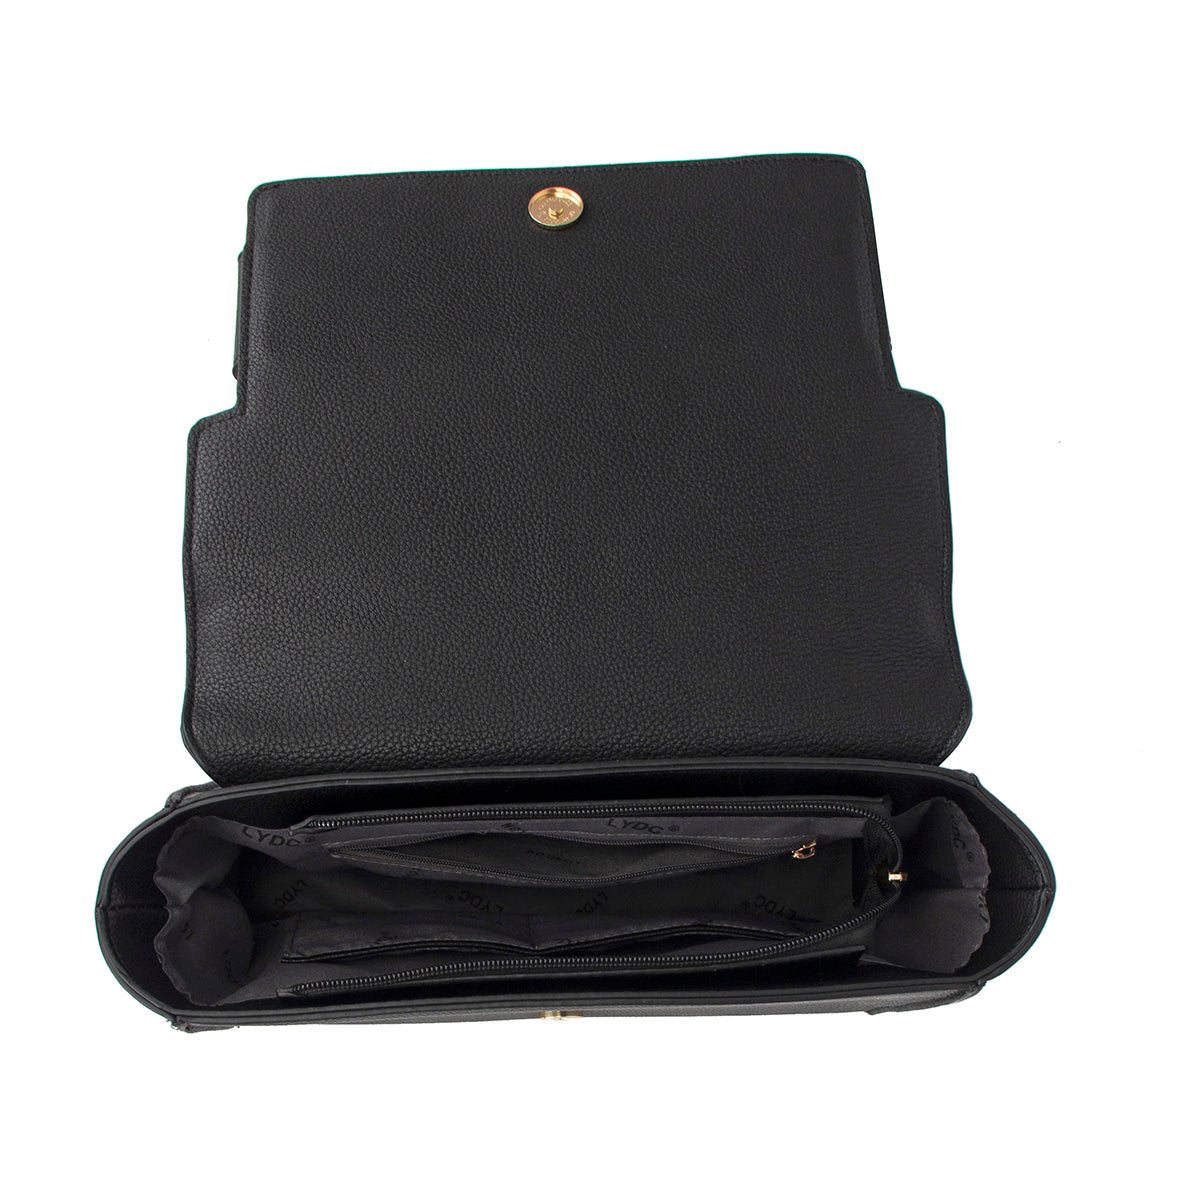 LYDC Medium Adjustable Strap Crossbody Ladies Handbag Women's Shoulder / Tote Bag